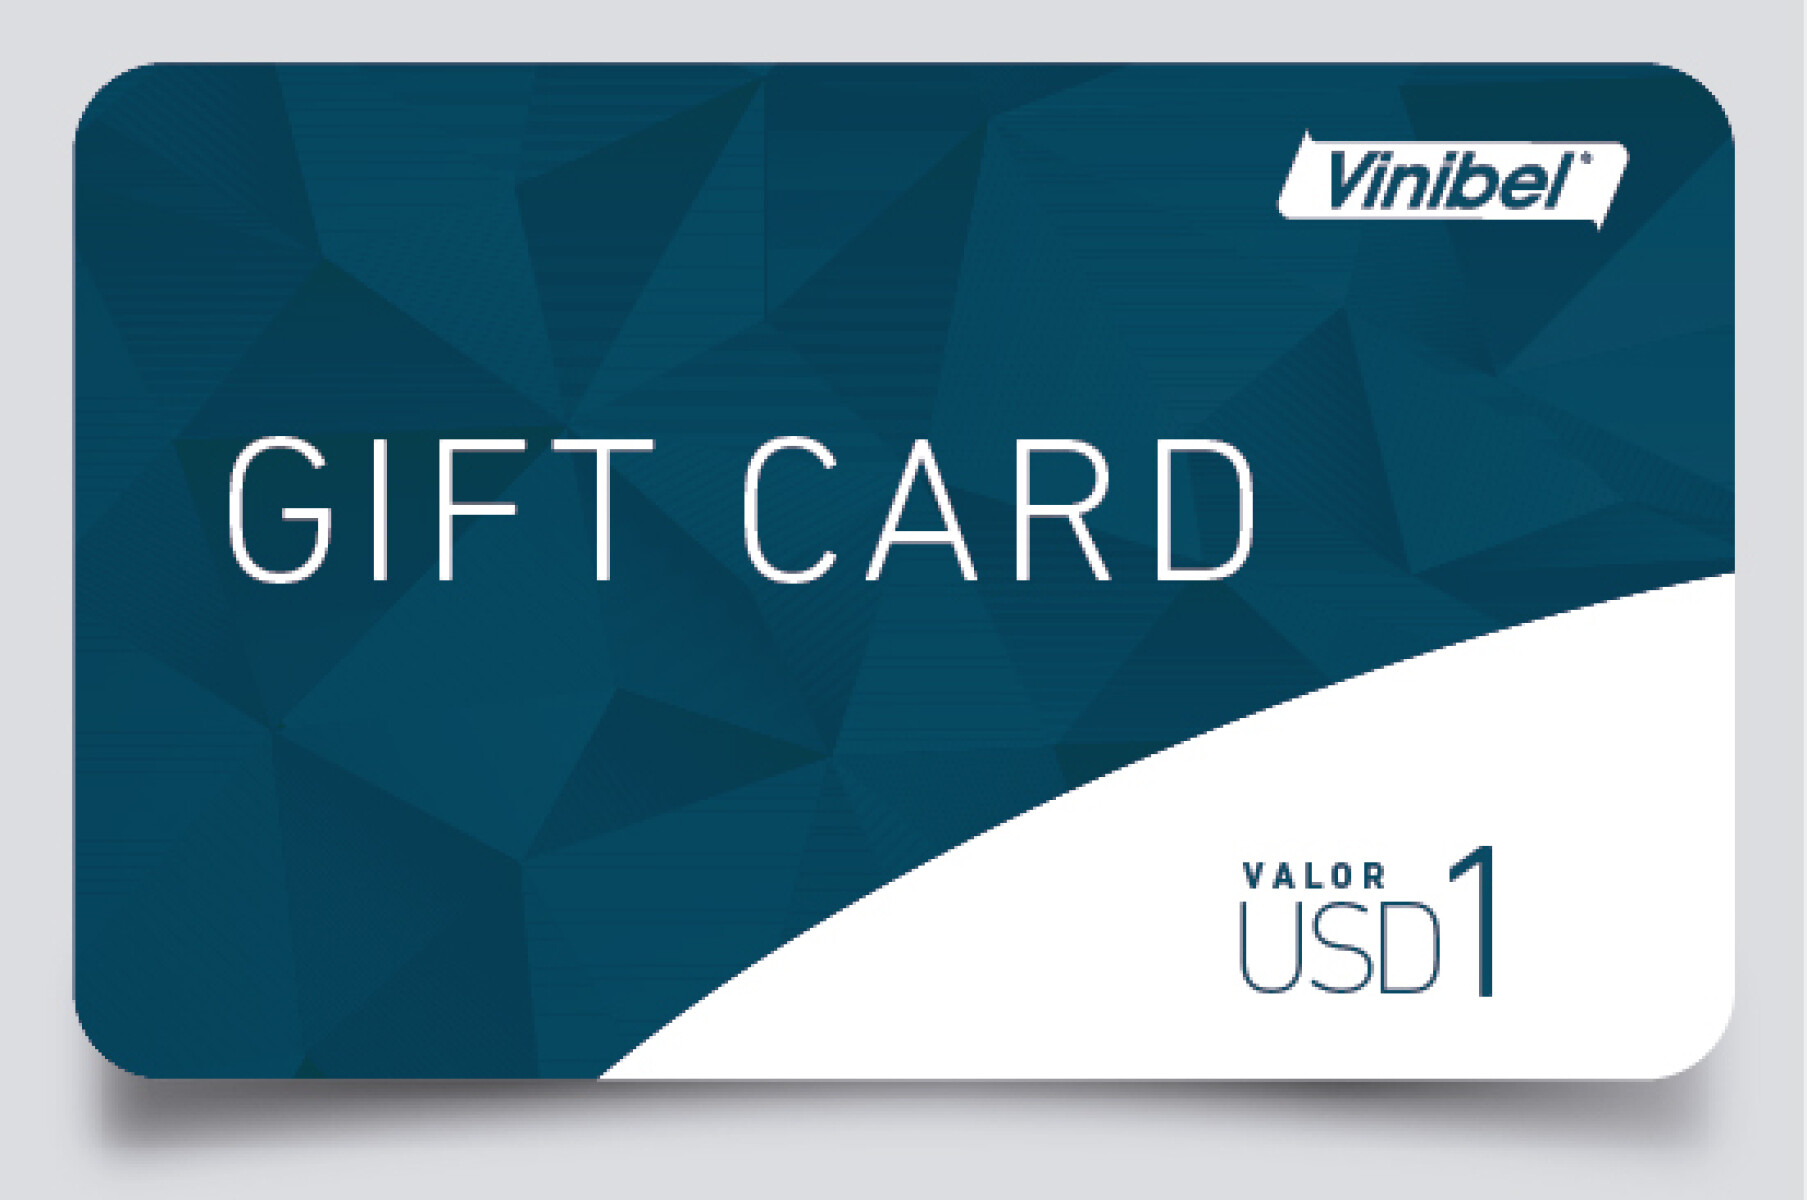 GIFT CARD VINIBEL - TARJETA GIFT CARD VINIBEL U$S 1 